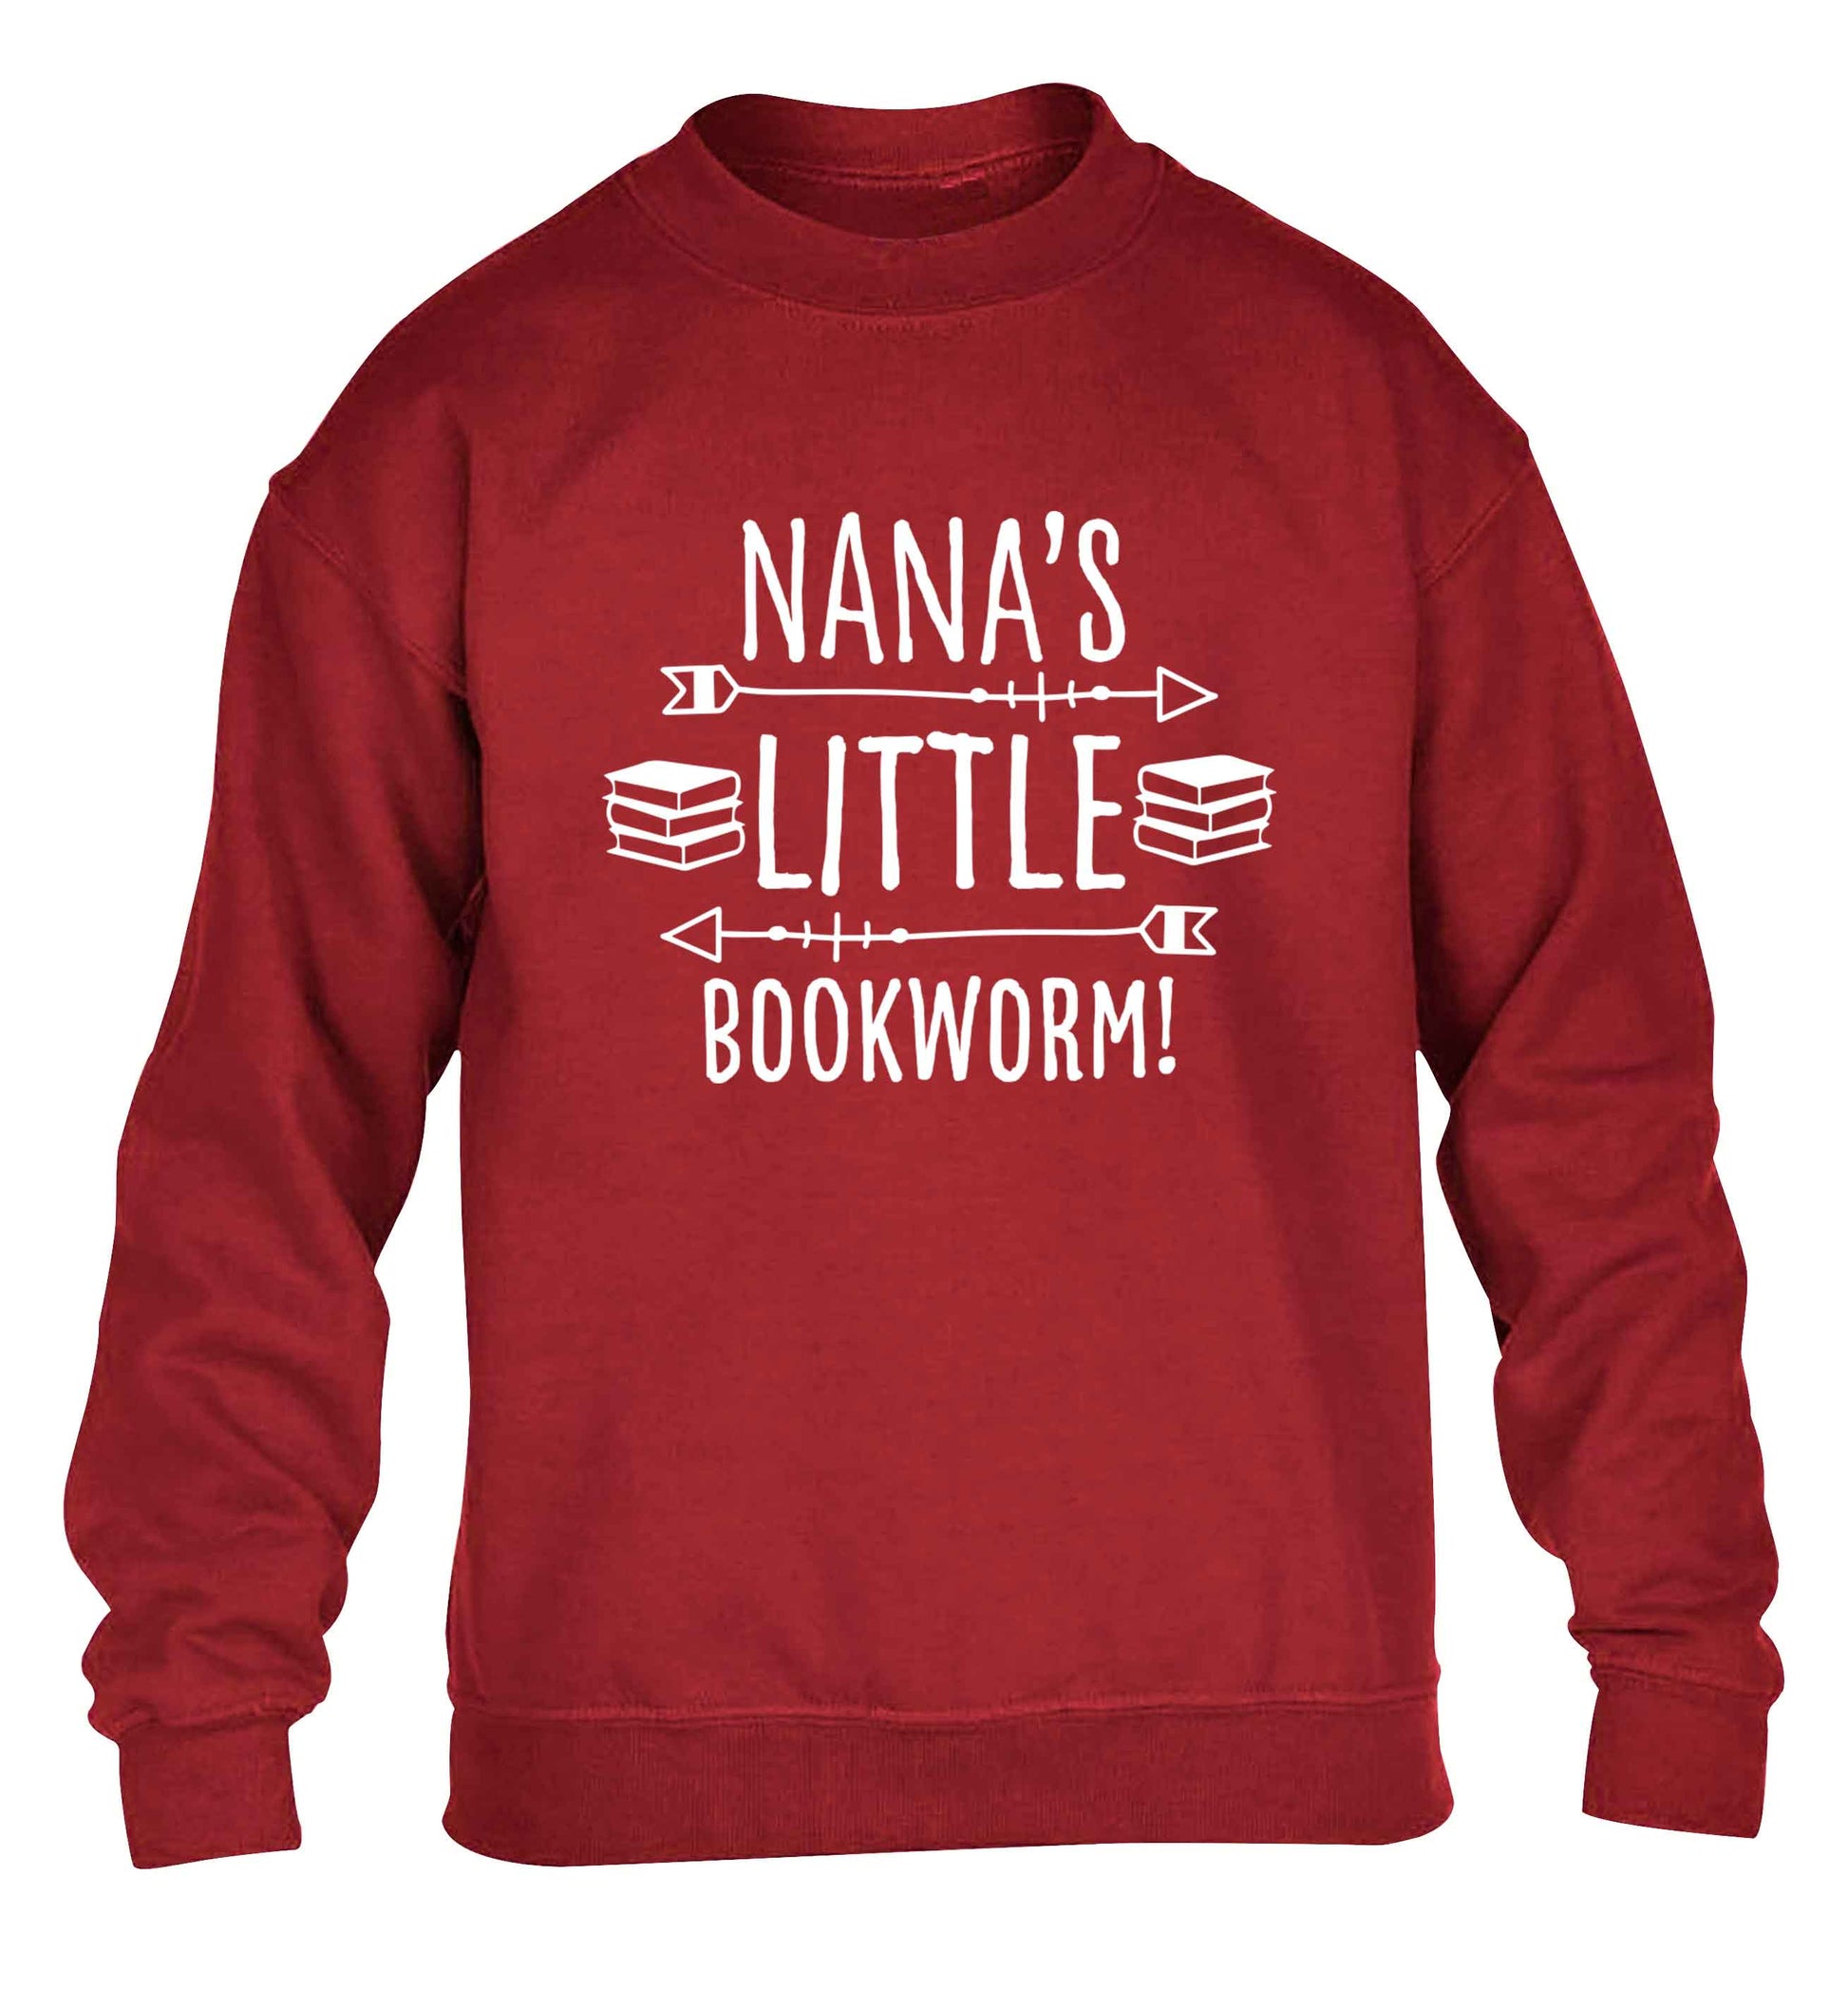 Nana's little bookworm children's grey sweater 12-13 Years